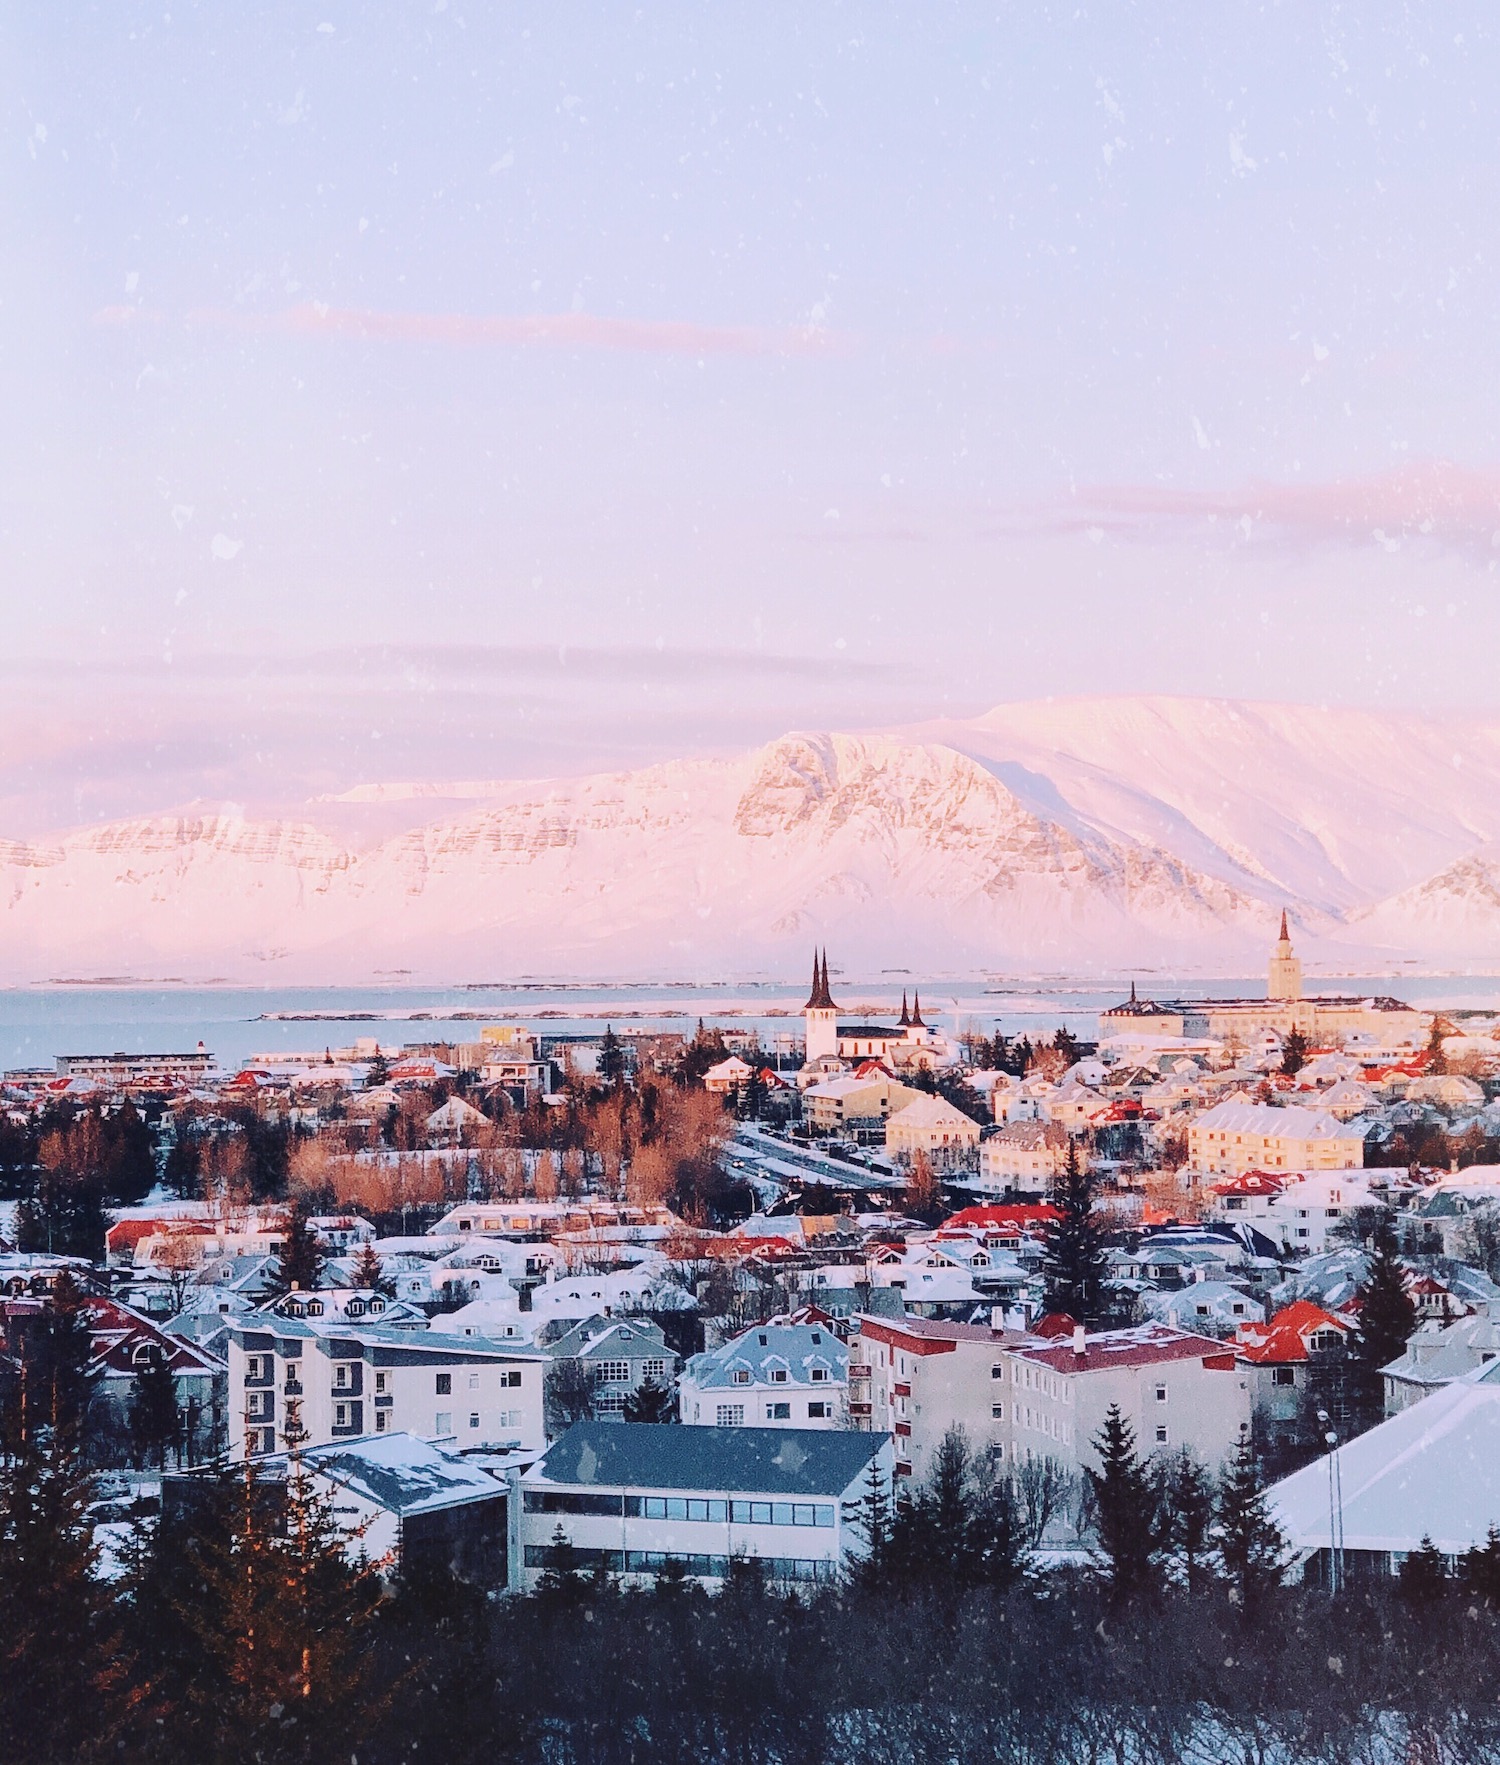 Winter View of Reykjavik, Iceland from Perlan Museum